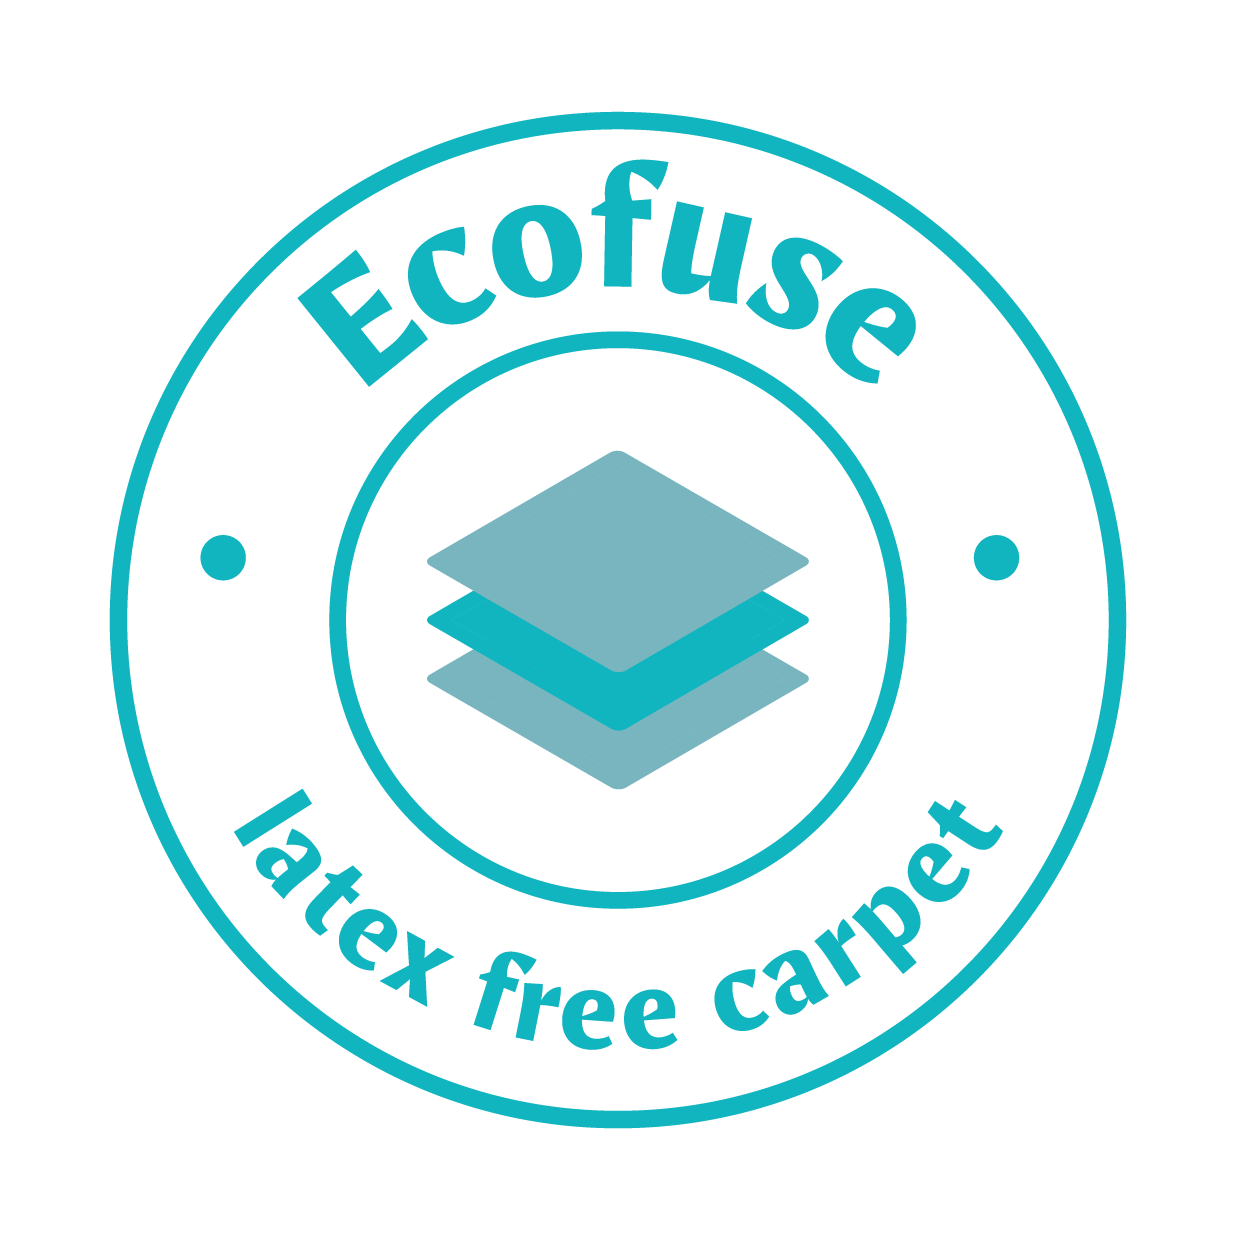 Ecofuse_Label_Ecofuse_Kleur.png